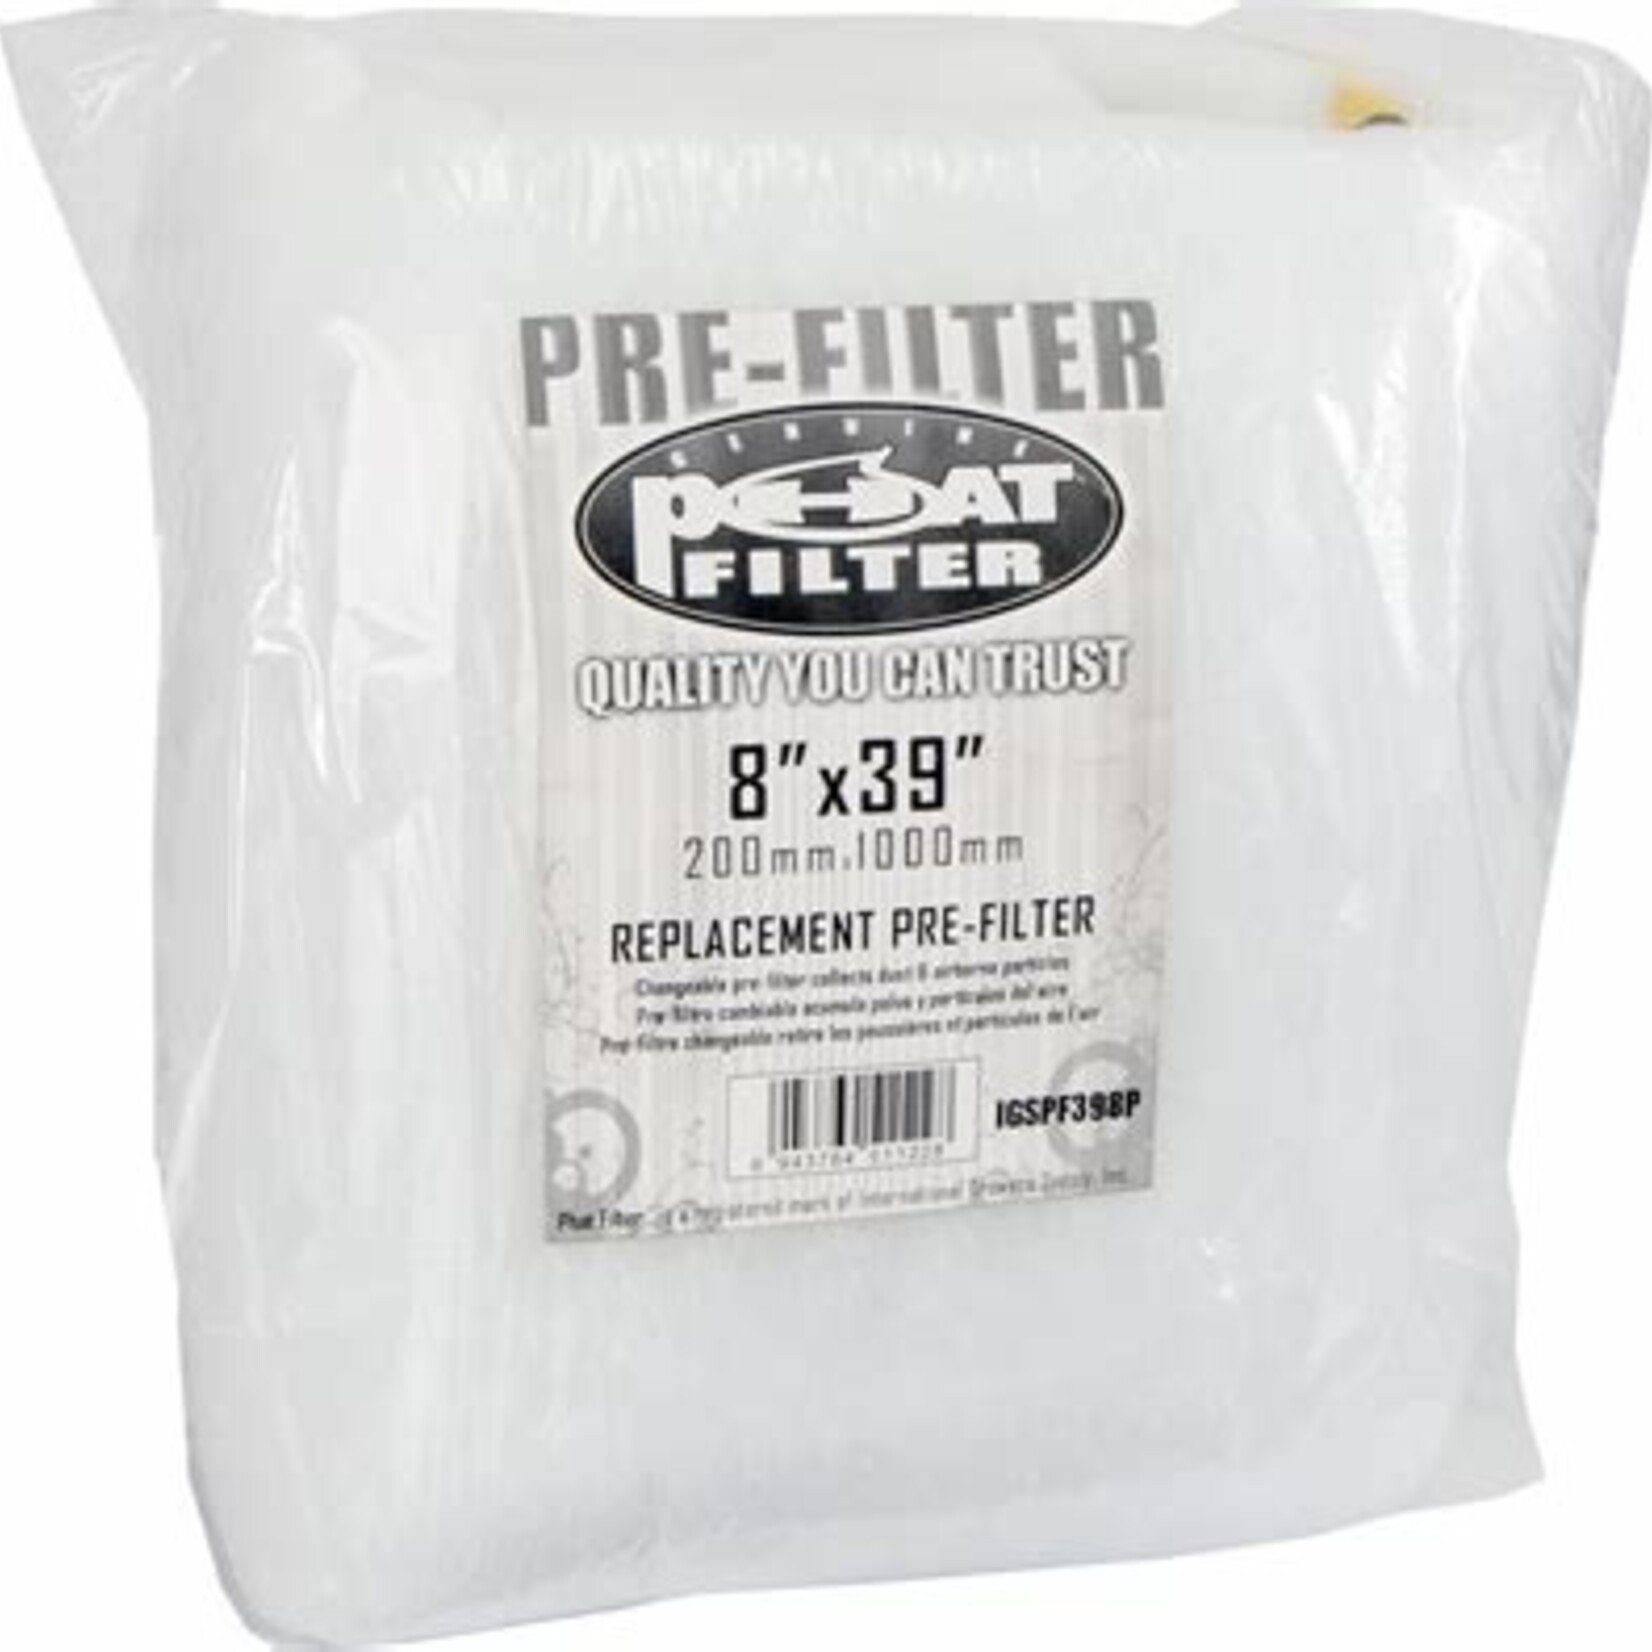 Phat Phat Pre-Filter 39x8